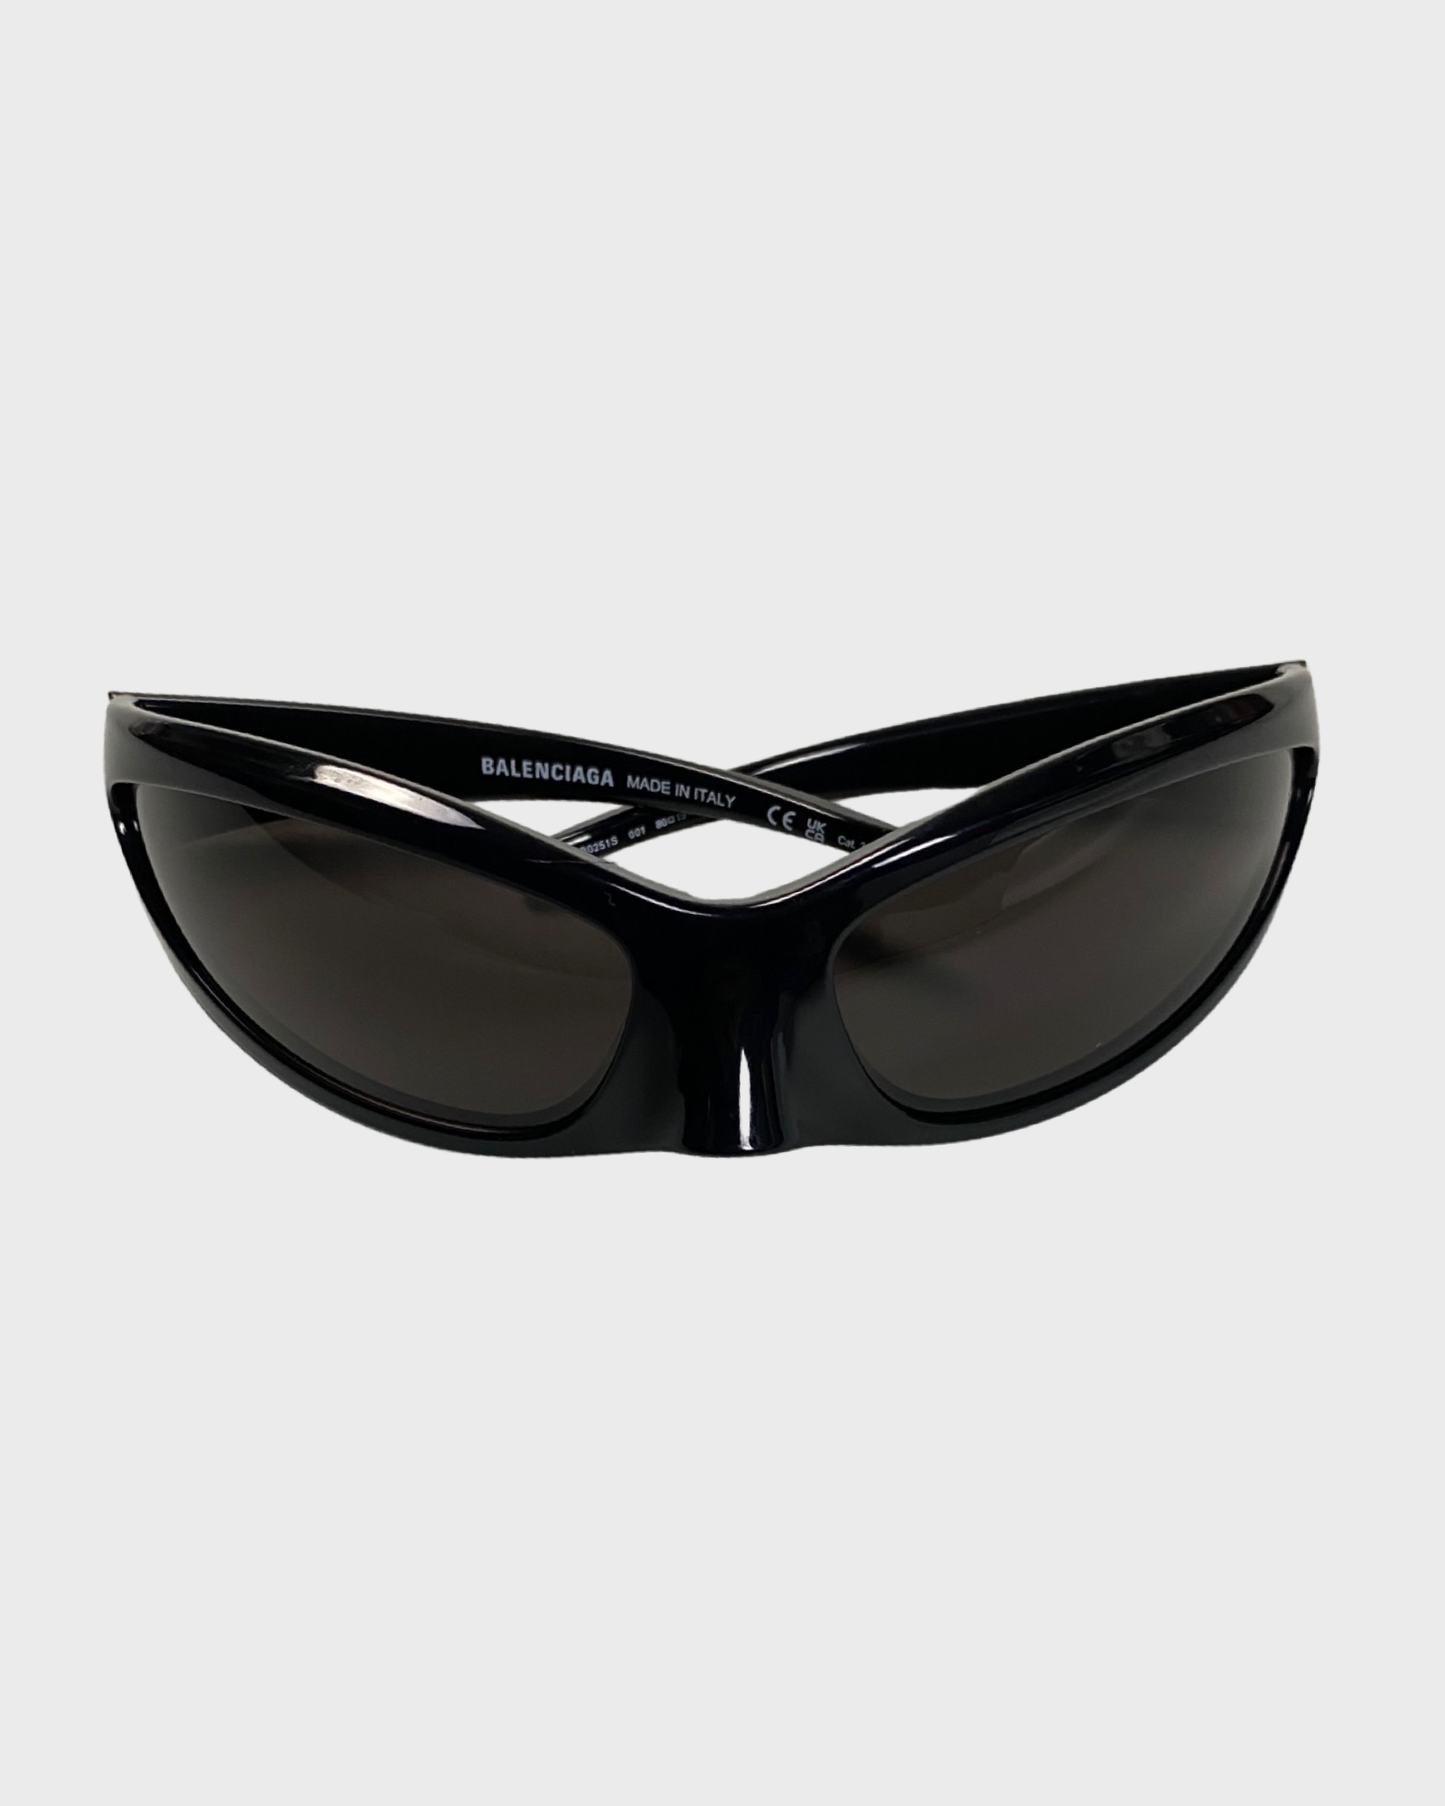 Balenciaga Skin cat sunglasses SZ:OS